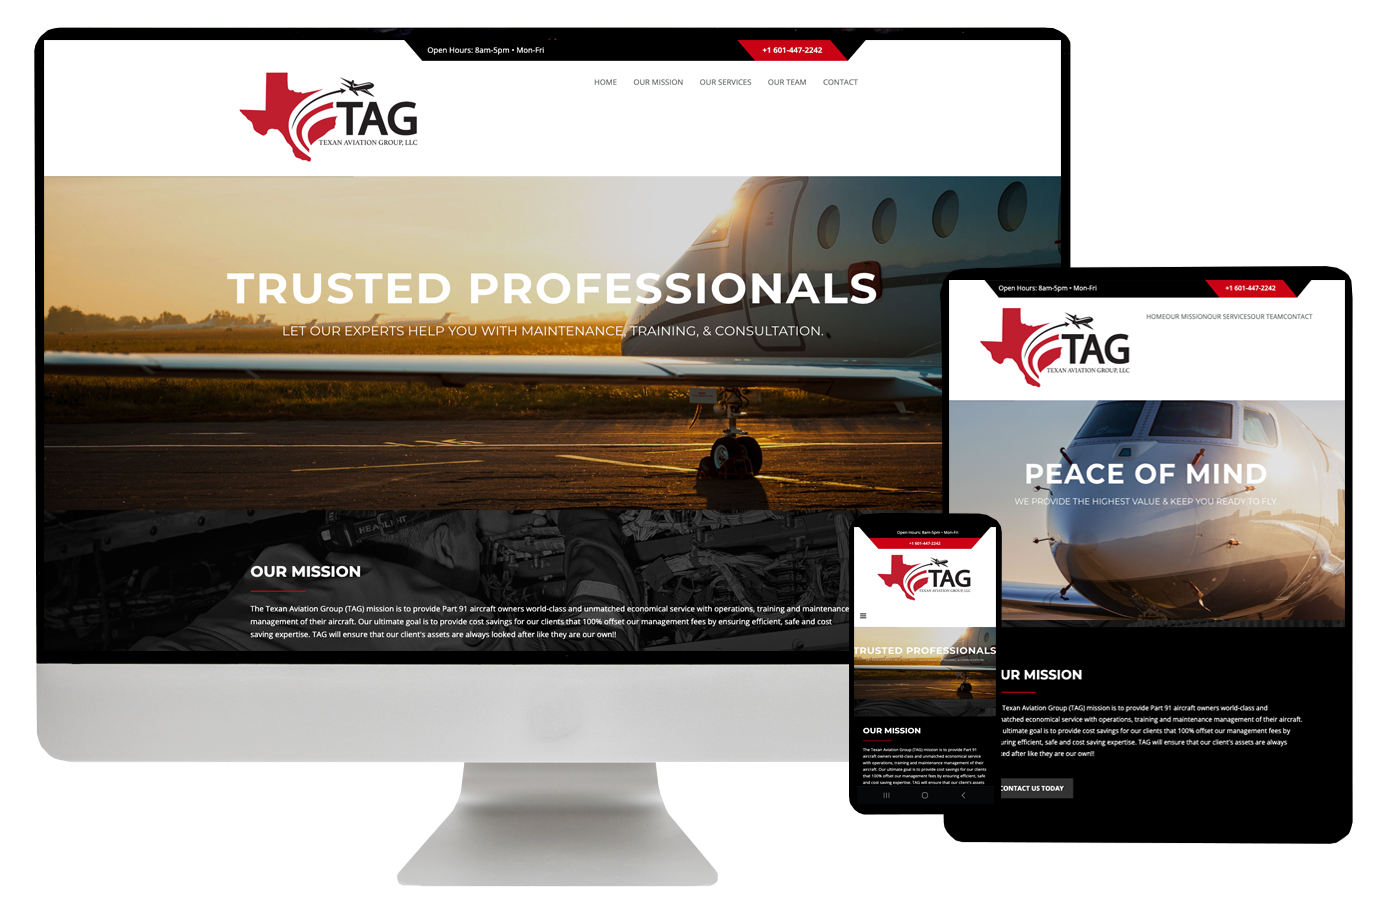 Texan Aviation Group (TAG) Website